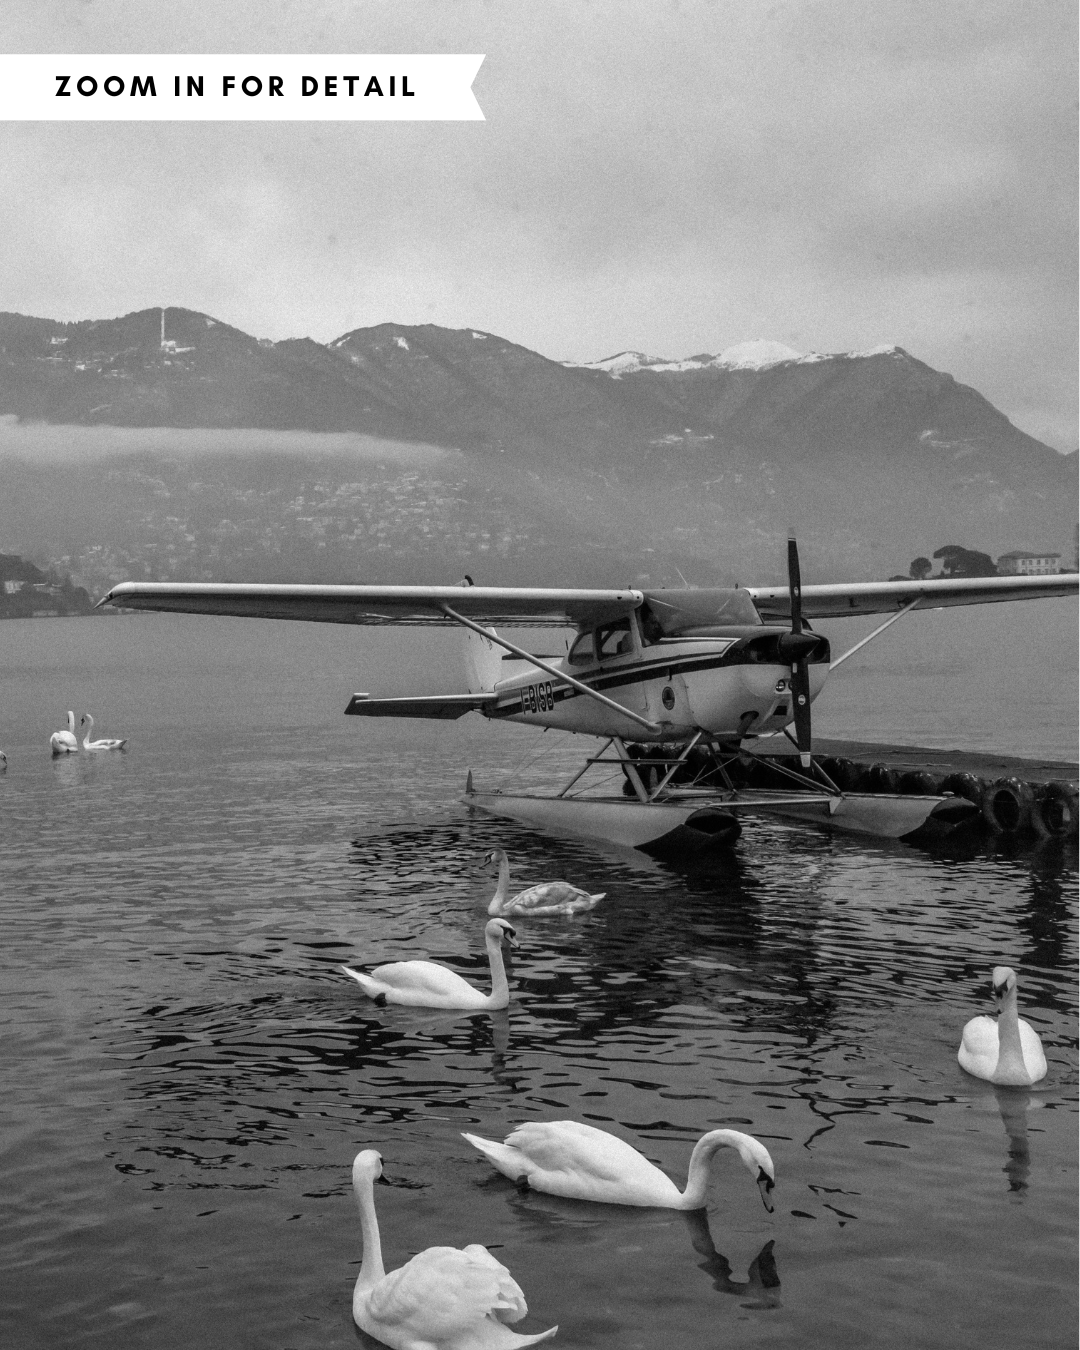 Swan Dive on Lake Como (Black and White)